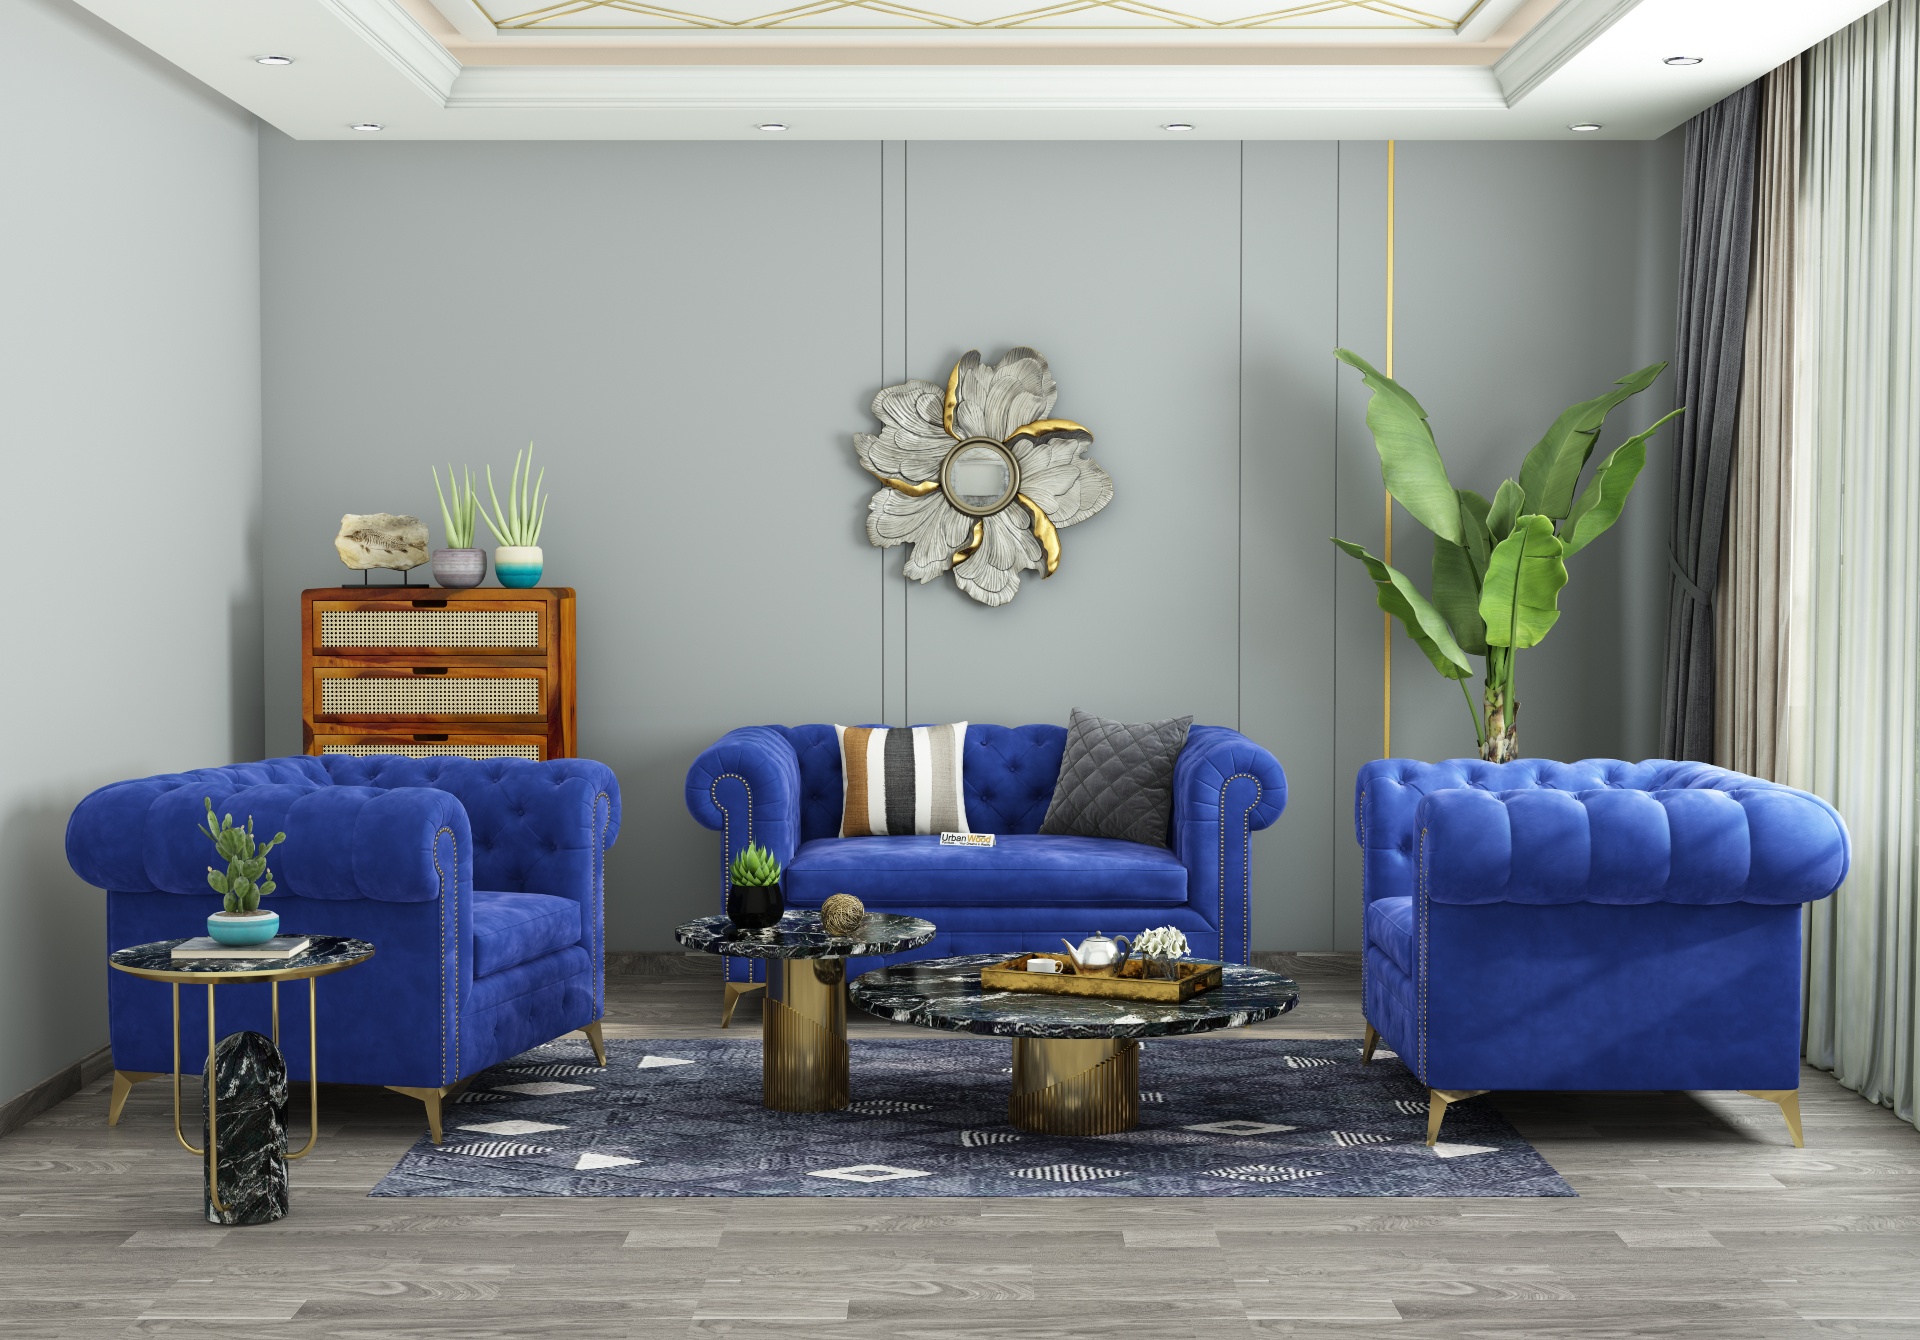 Regal 2+1+1 Seater Fabric Sofa (Velvet, Sapphire Blue)